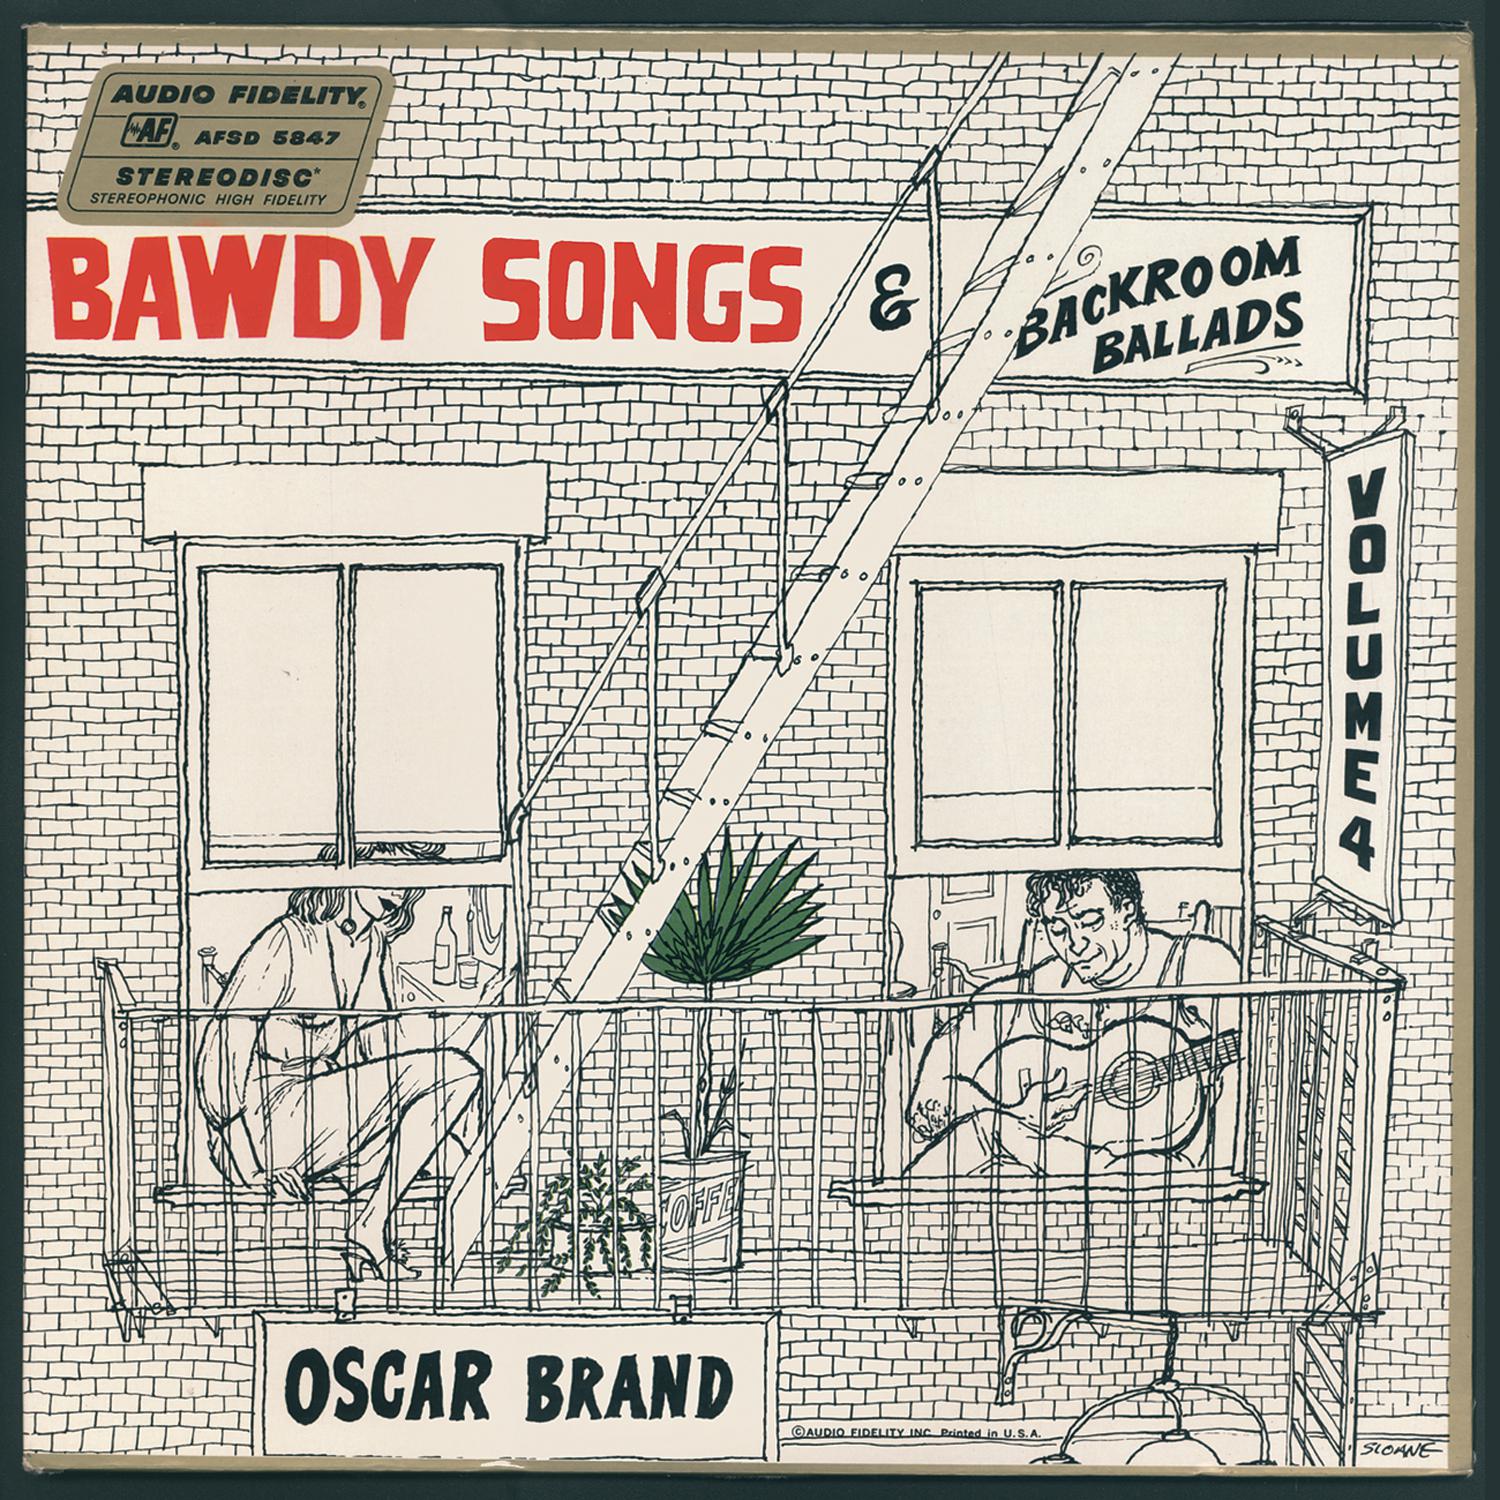 Bawdy Songs & Backroom Ballads - Volume 4